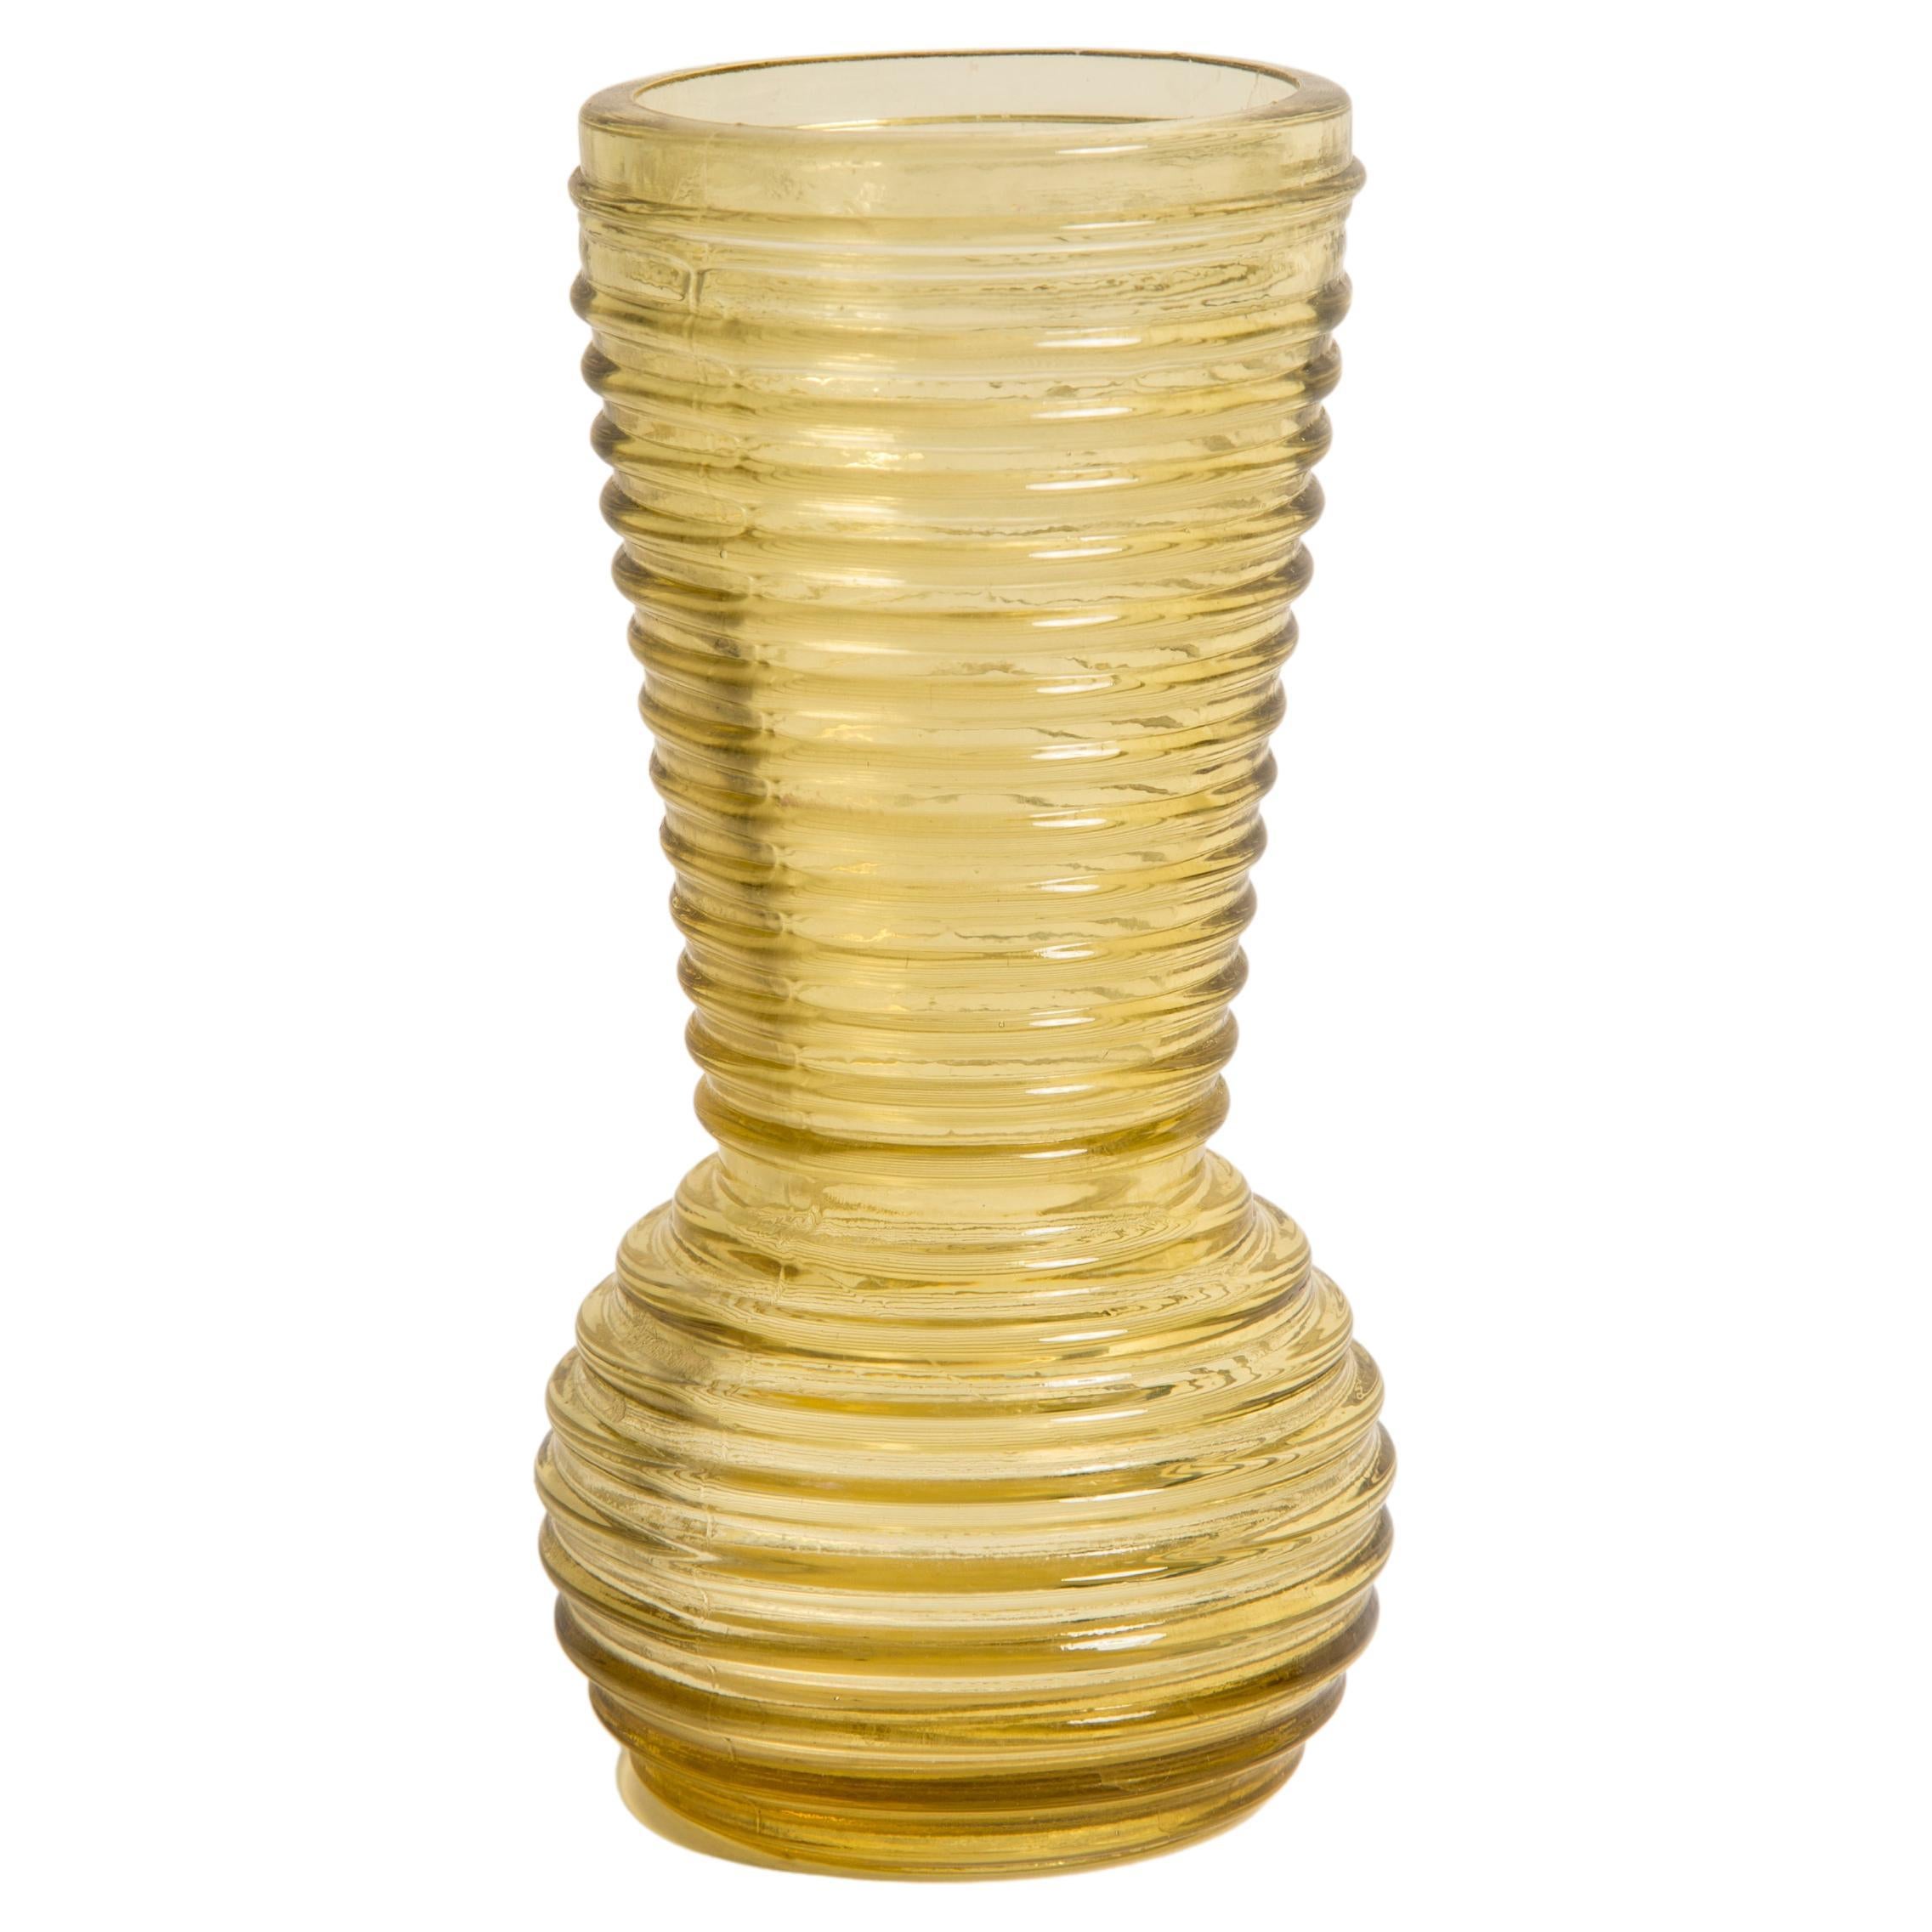 Midcentury Vintage Yellow Small Geometric Vase, Europe, 1960s